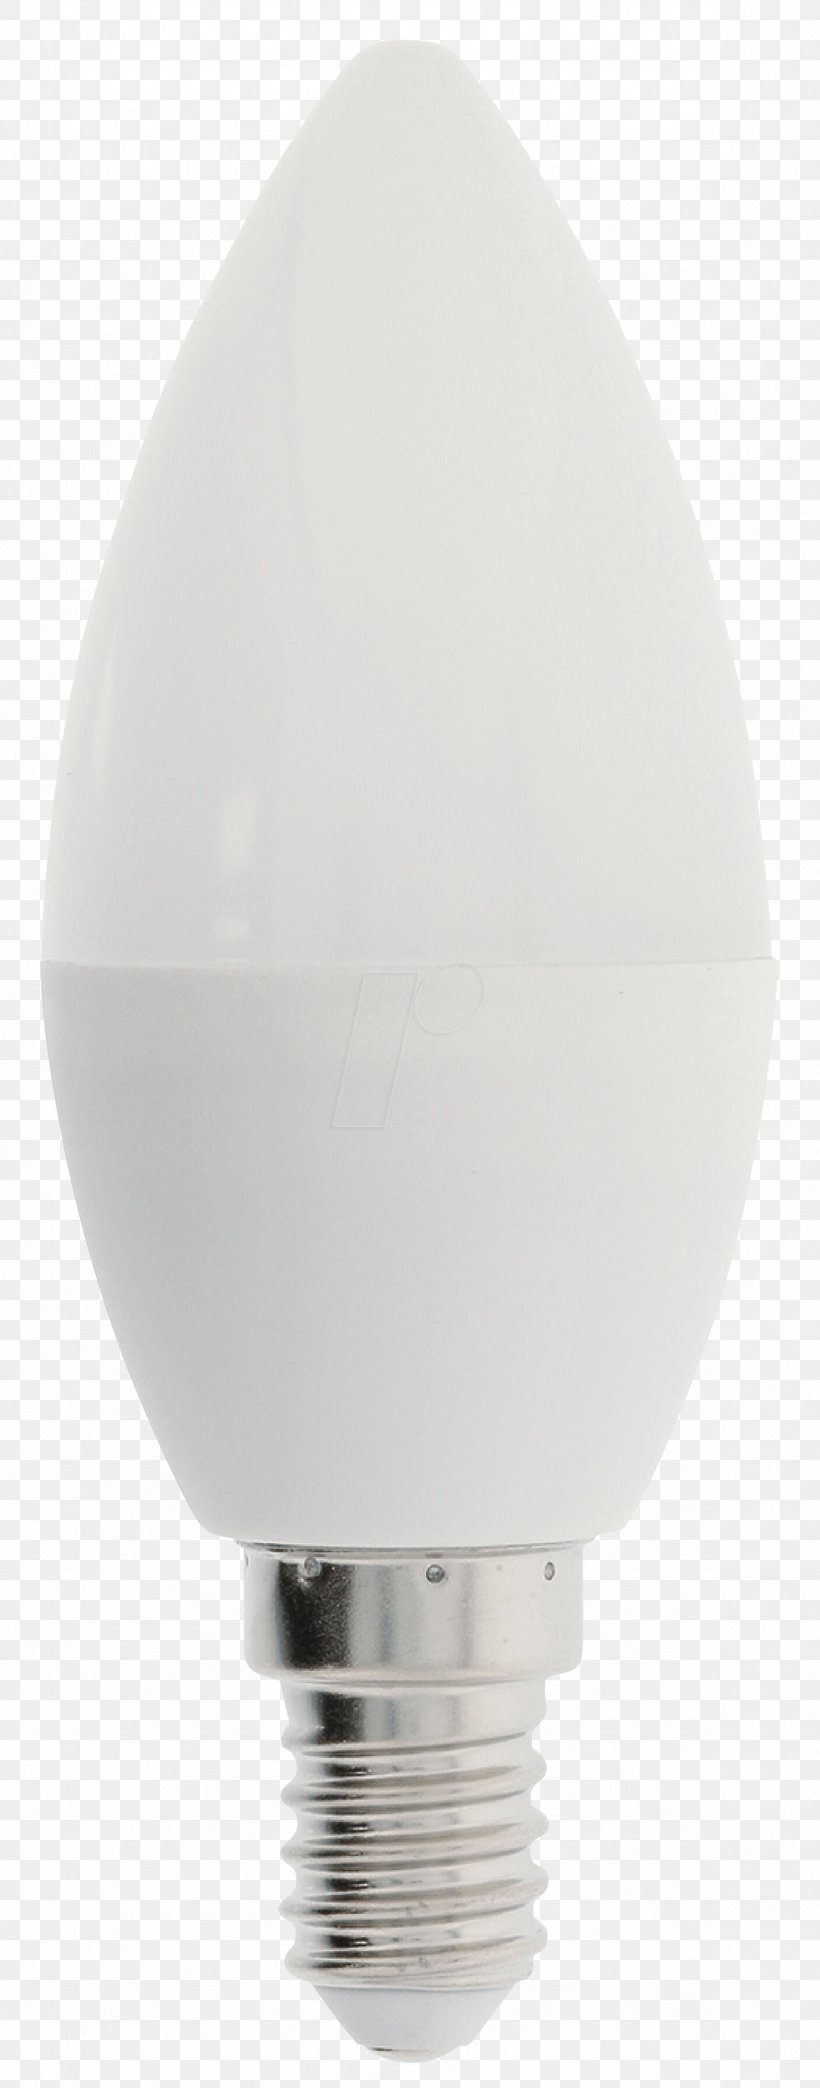 Lighting LED Lamp Candle Incandescent Light Bulb, PNG, 1178x3000px, Lighting, Candle, Edison Screw, Ferrari P, Incandescent Light Bulb Download Free